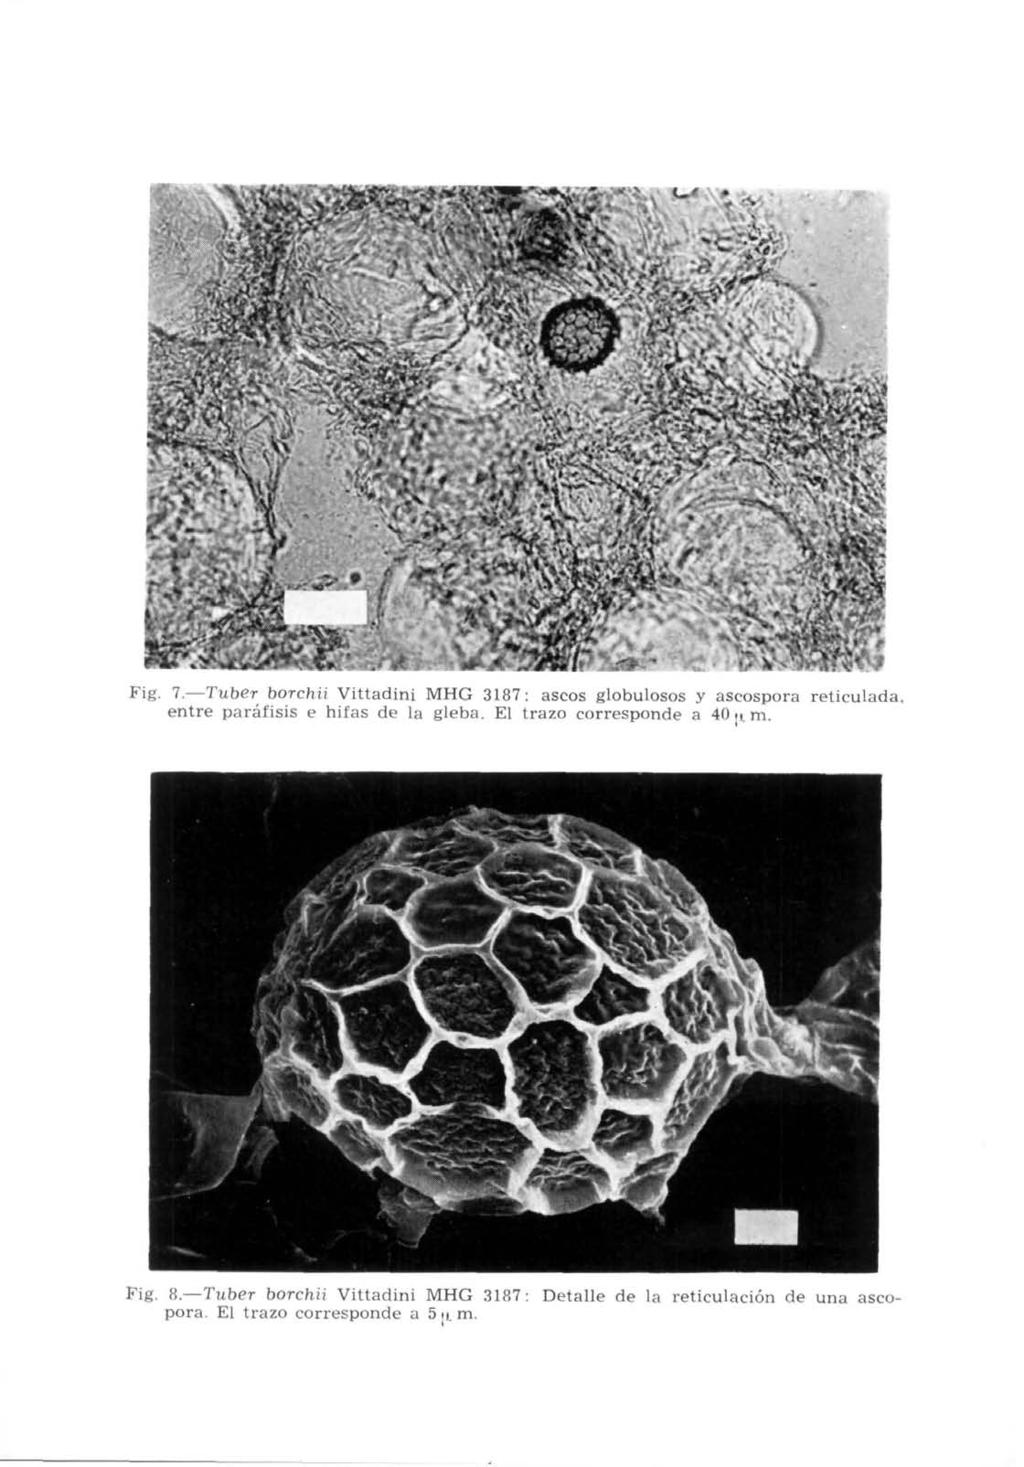 ',.^. Fig- 7. Tuber borchii Vittadini MHG 3187: ascos globulosos y ascospora reticulada, entre paráfisis e hitas de la gleba.